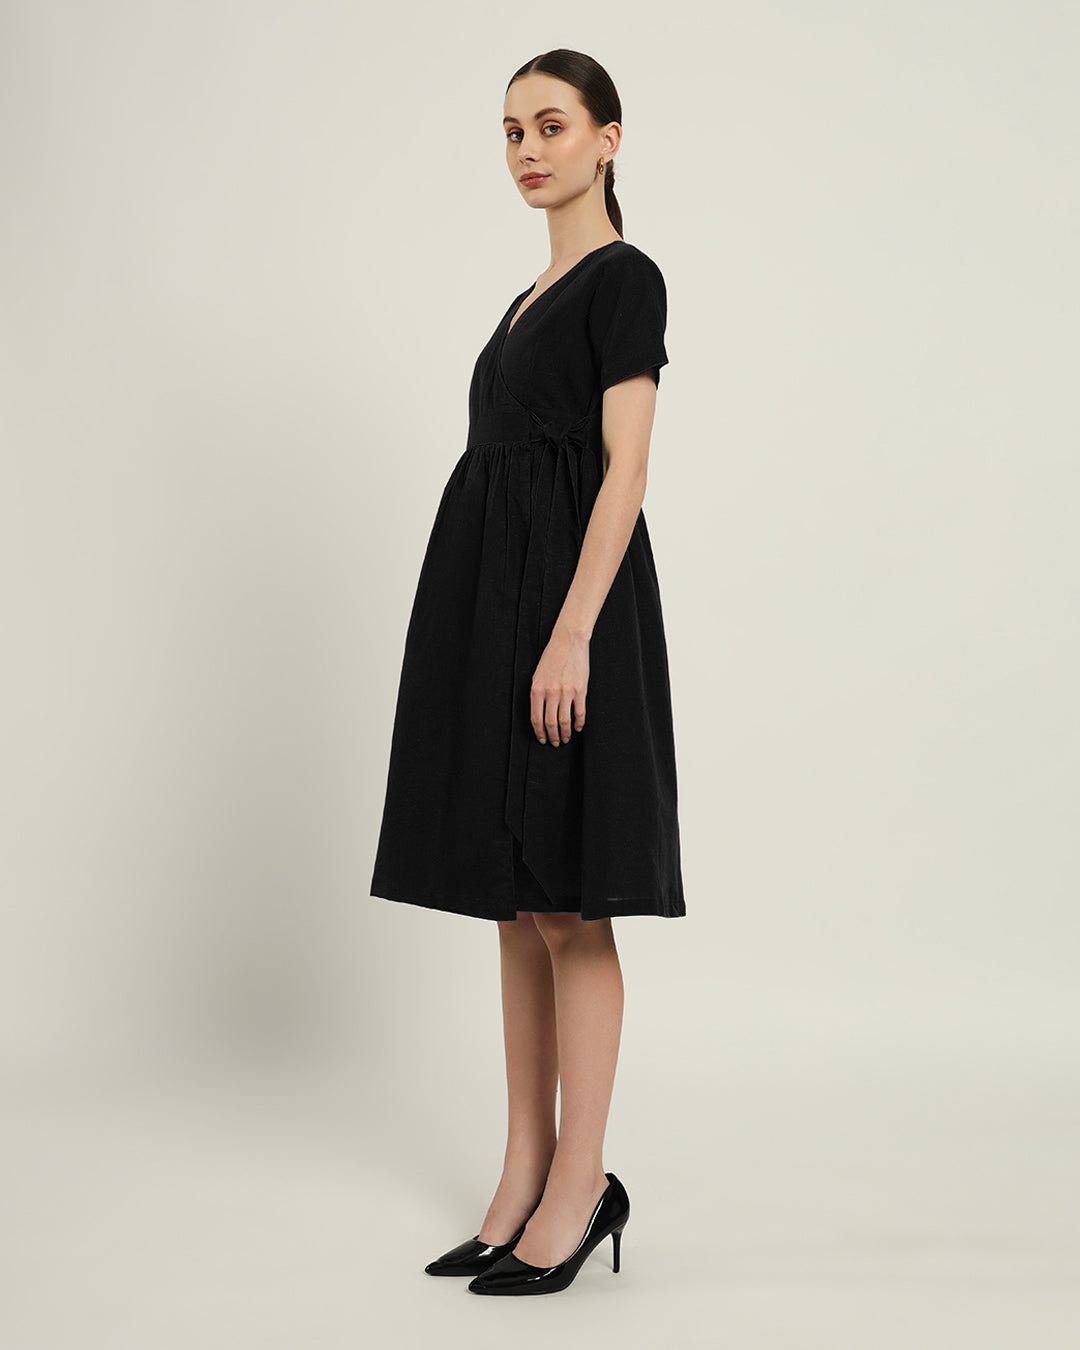 The Miyoshi Noir Cotton Dress